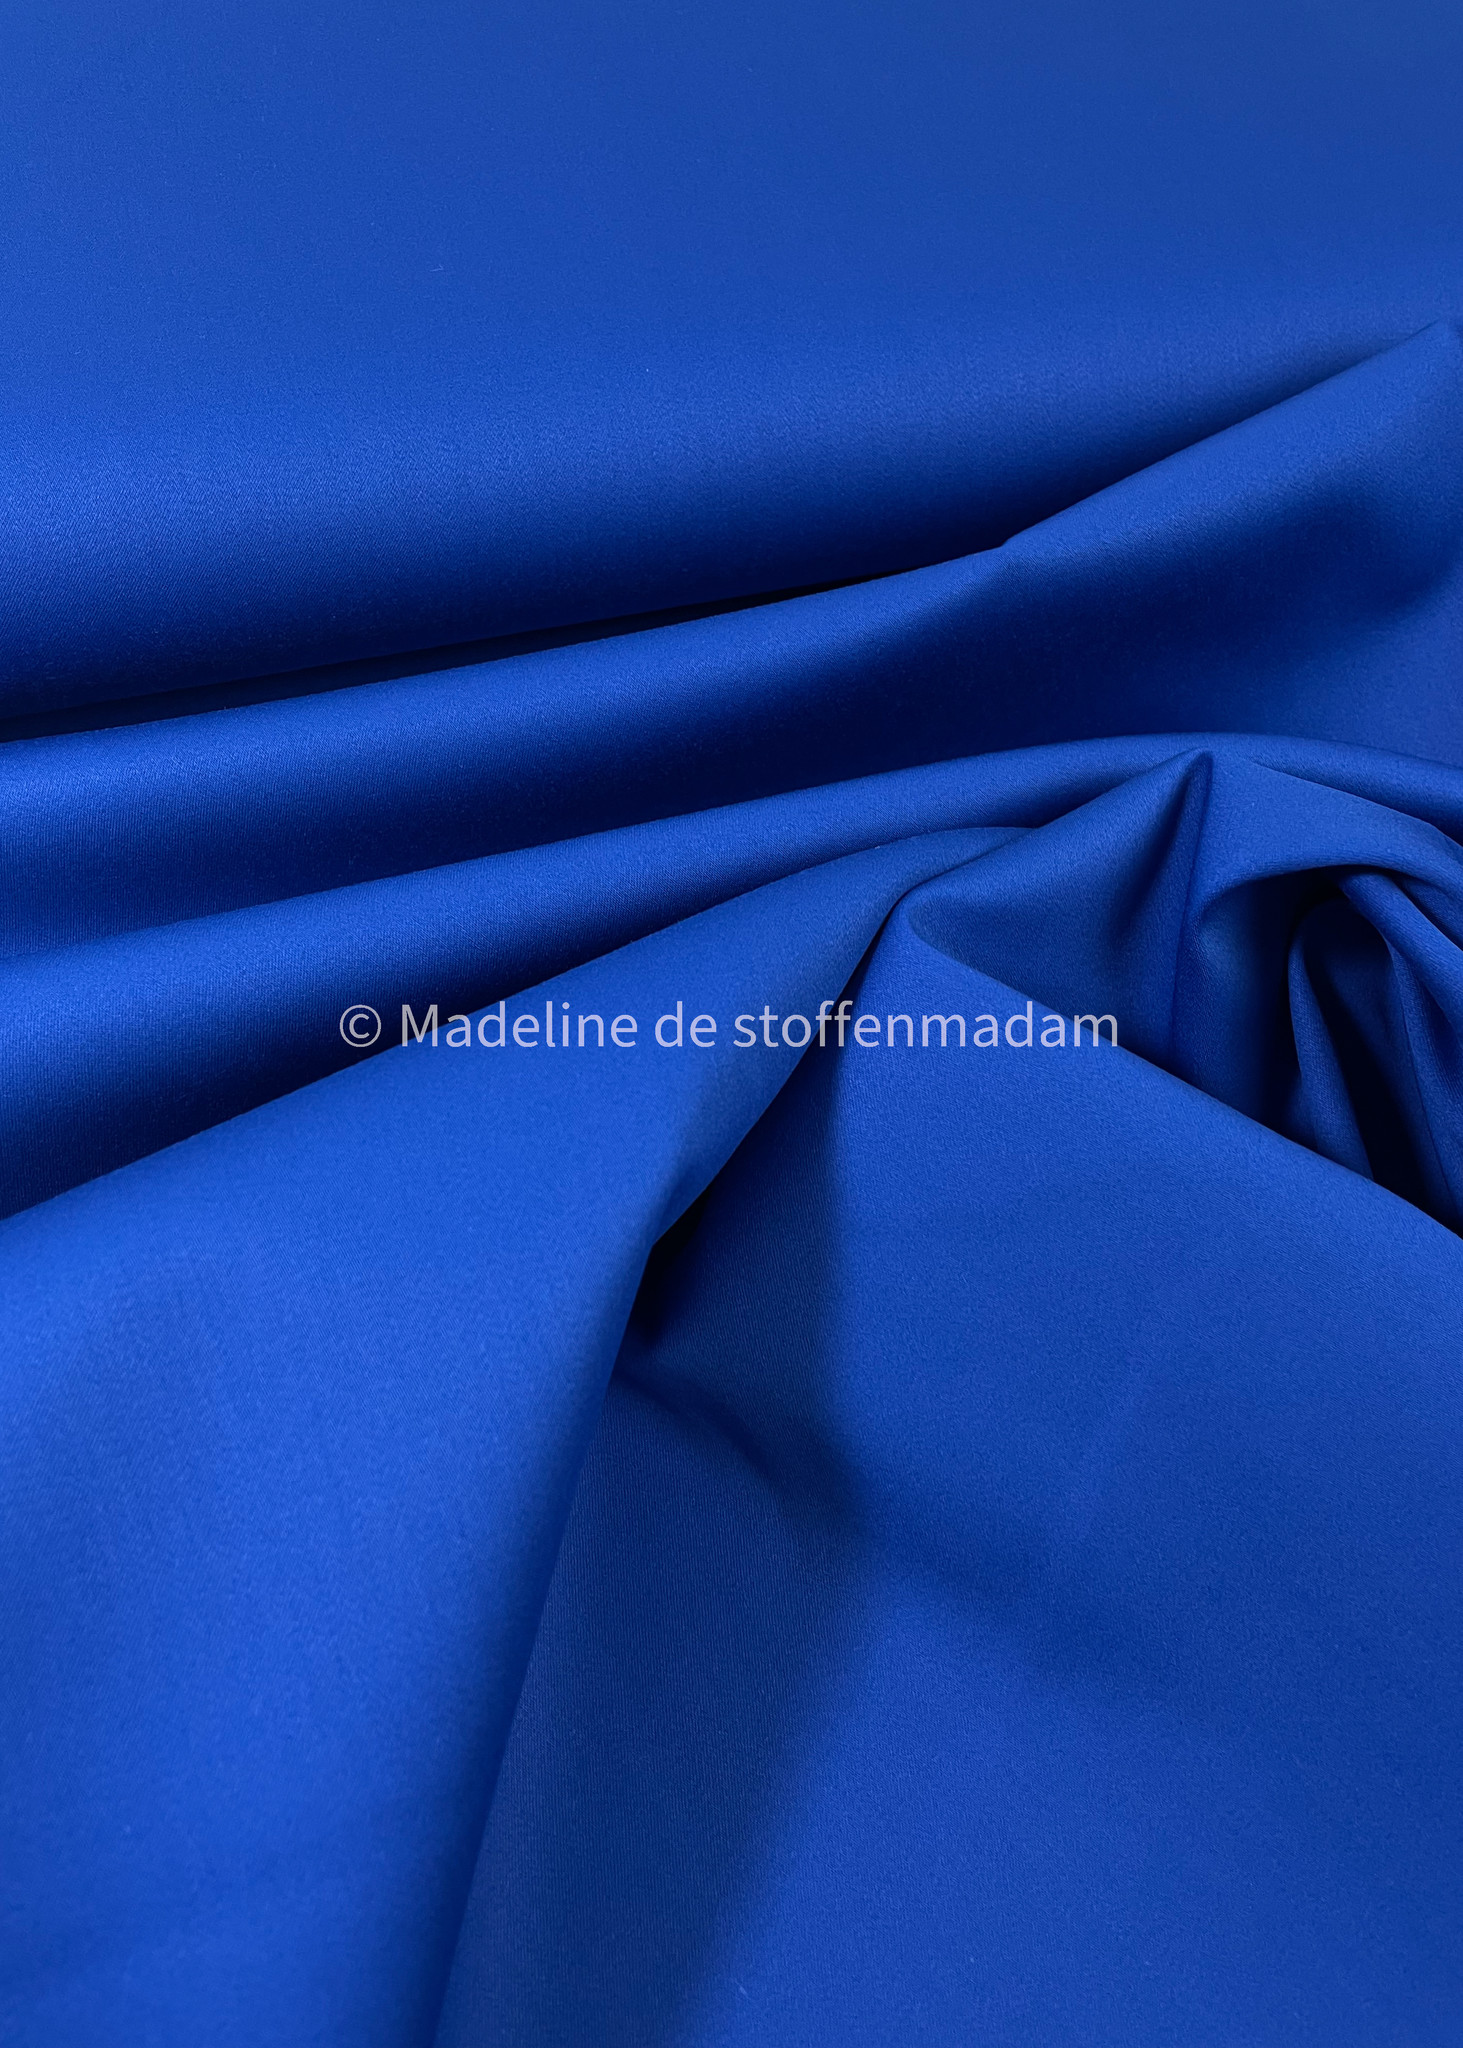 Viscose Elastane stretch jersey fabric, per metre - light blue